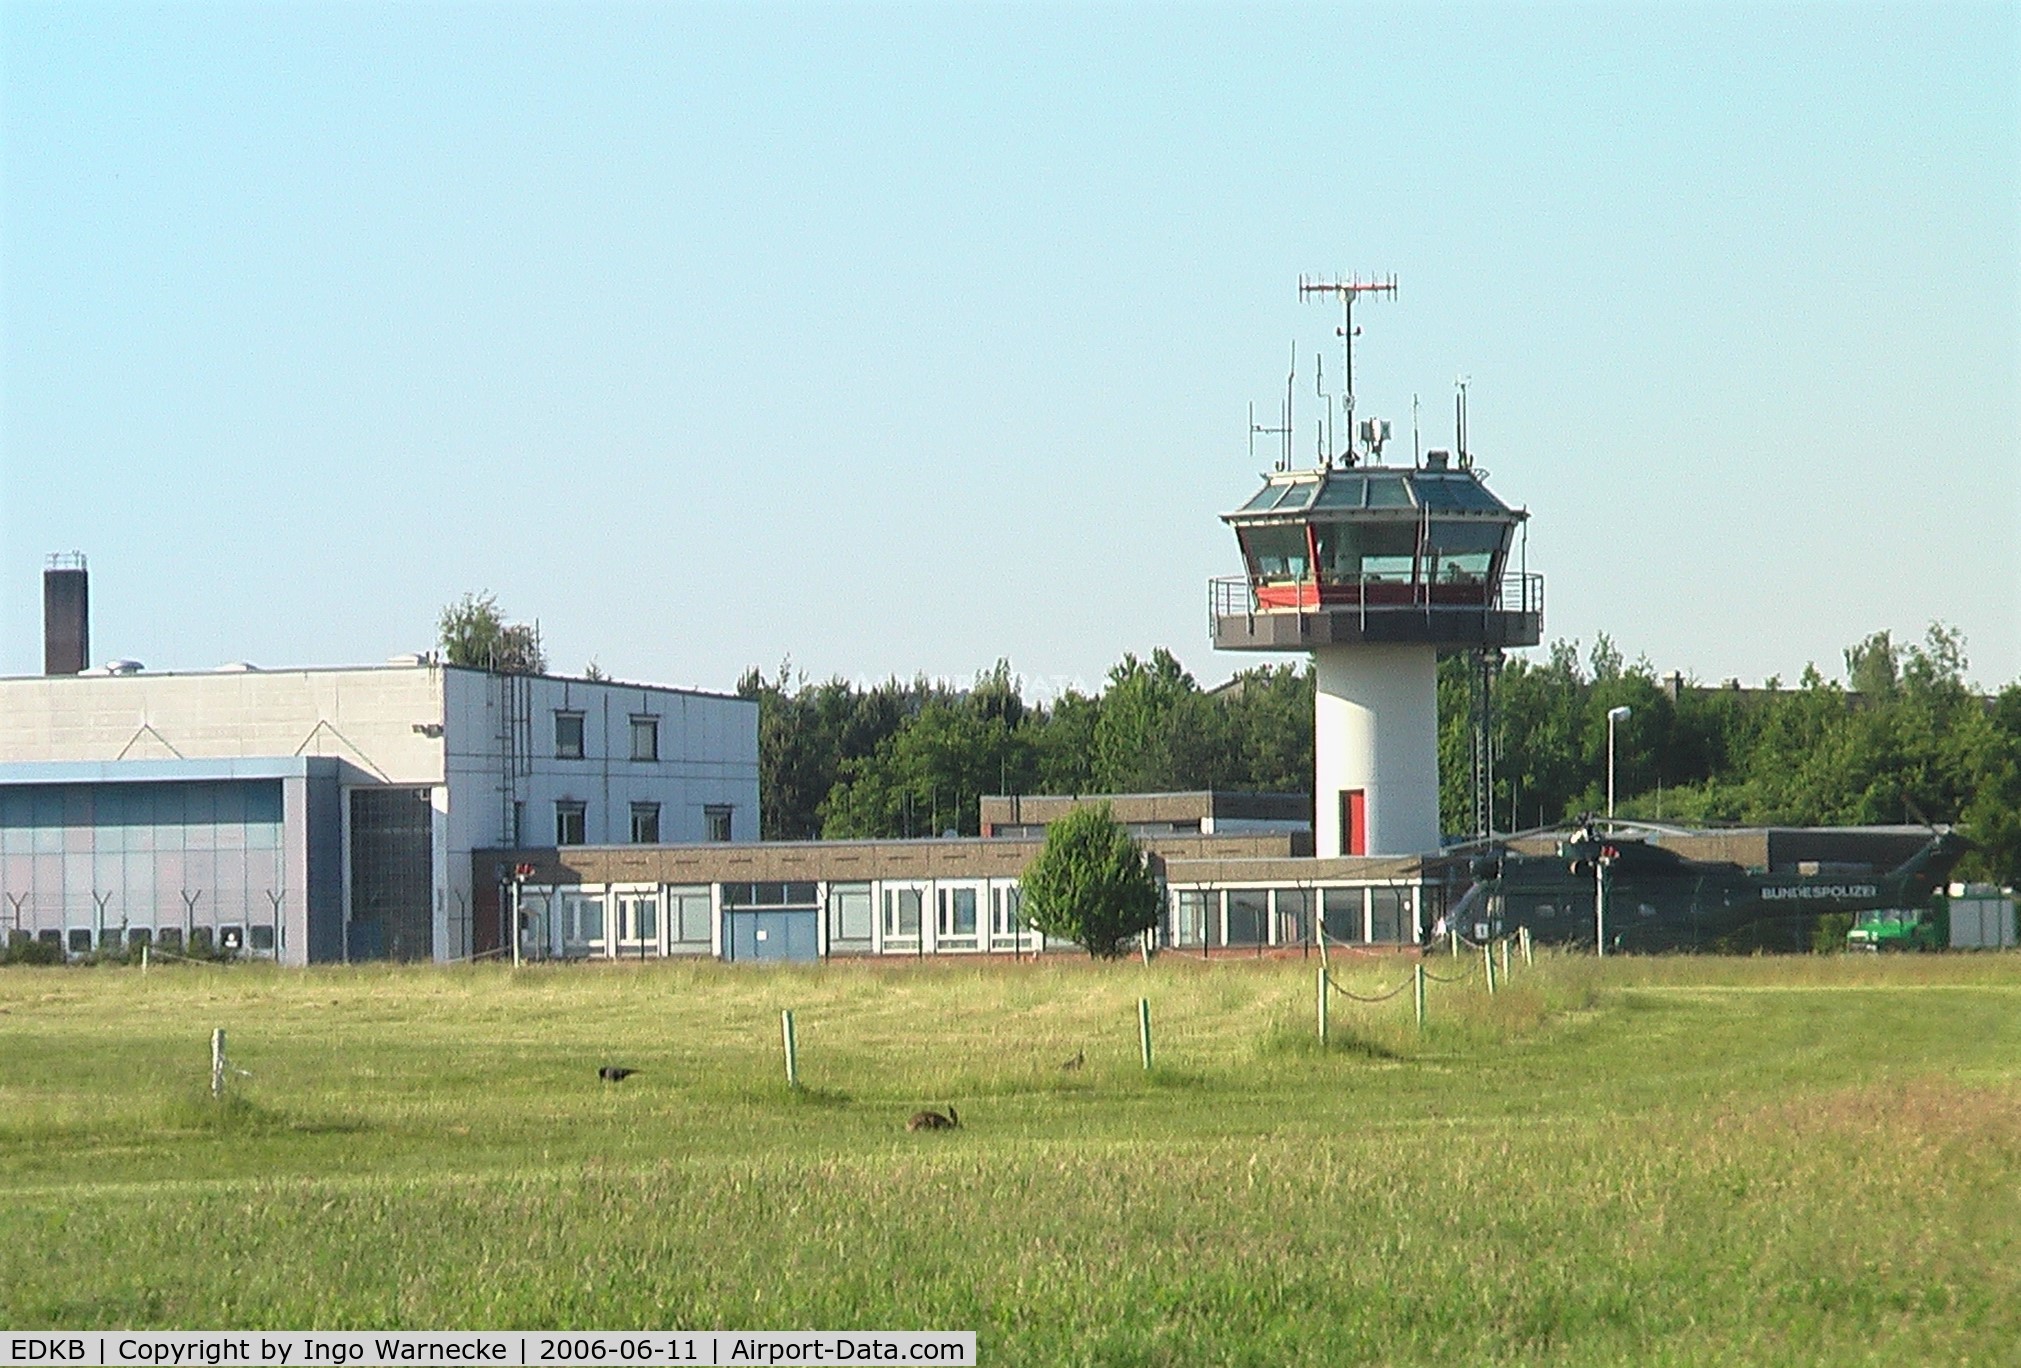 Bonn-Hangelar Airport, Sankt Augustin Germany (EDKB) - tower and buildings at the western part (Bundespolizei, federal police) of Bonn/Hangelar airfield